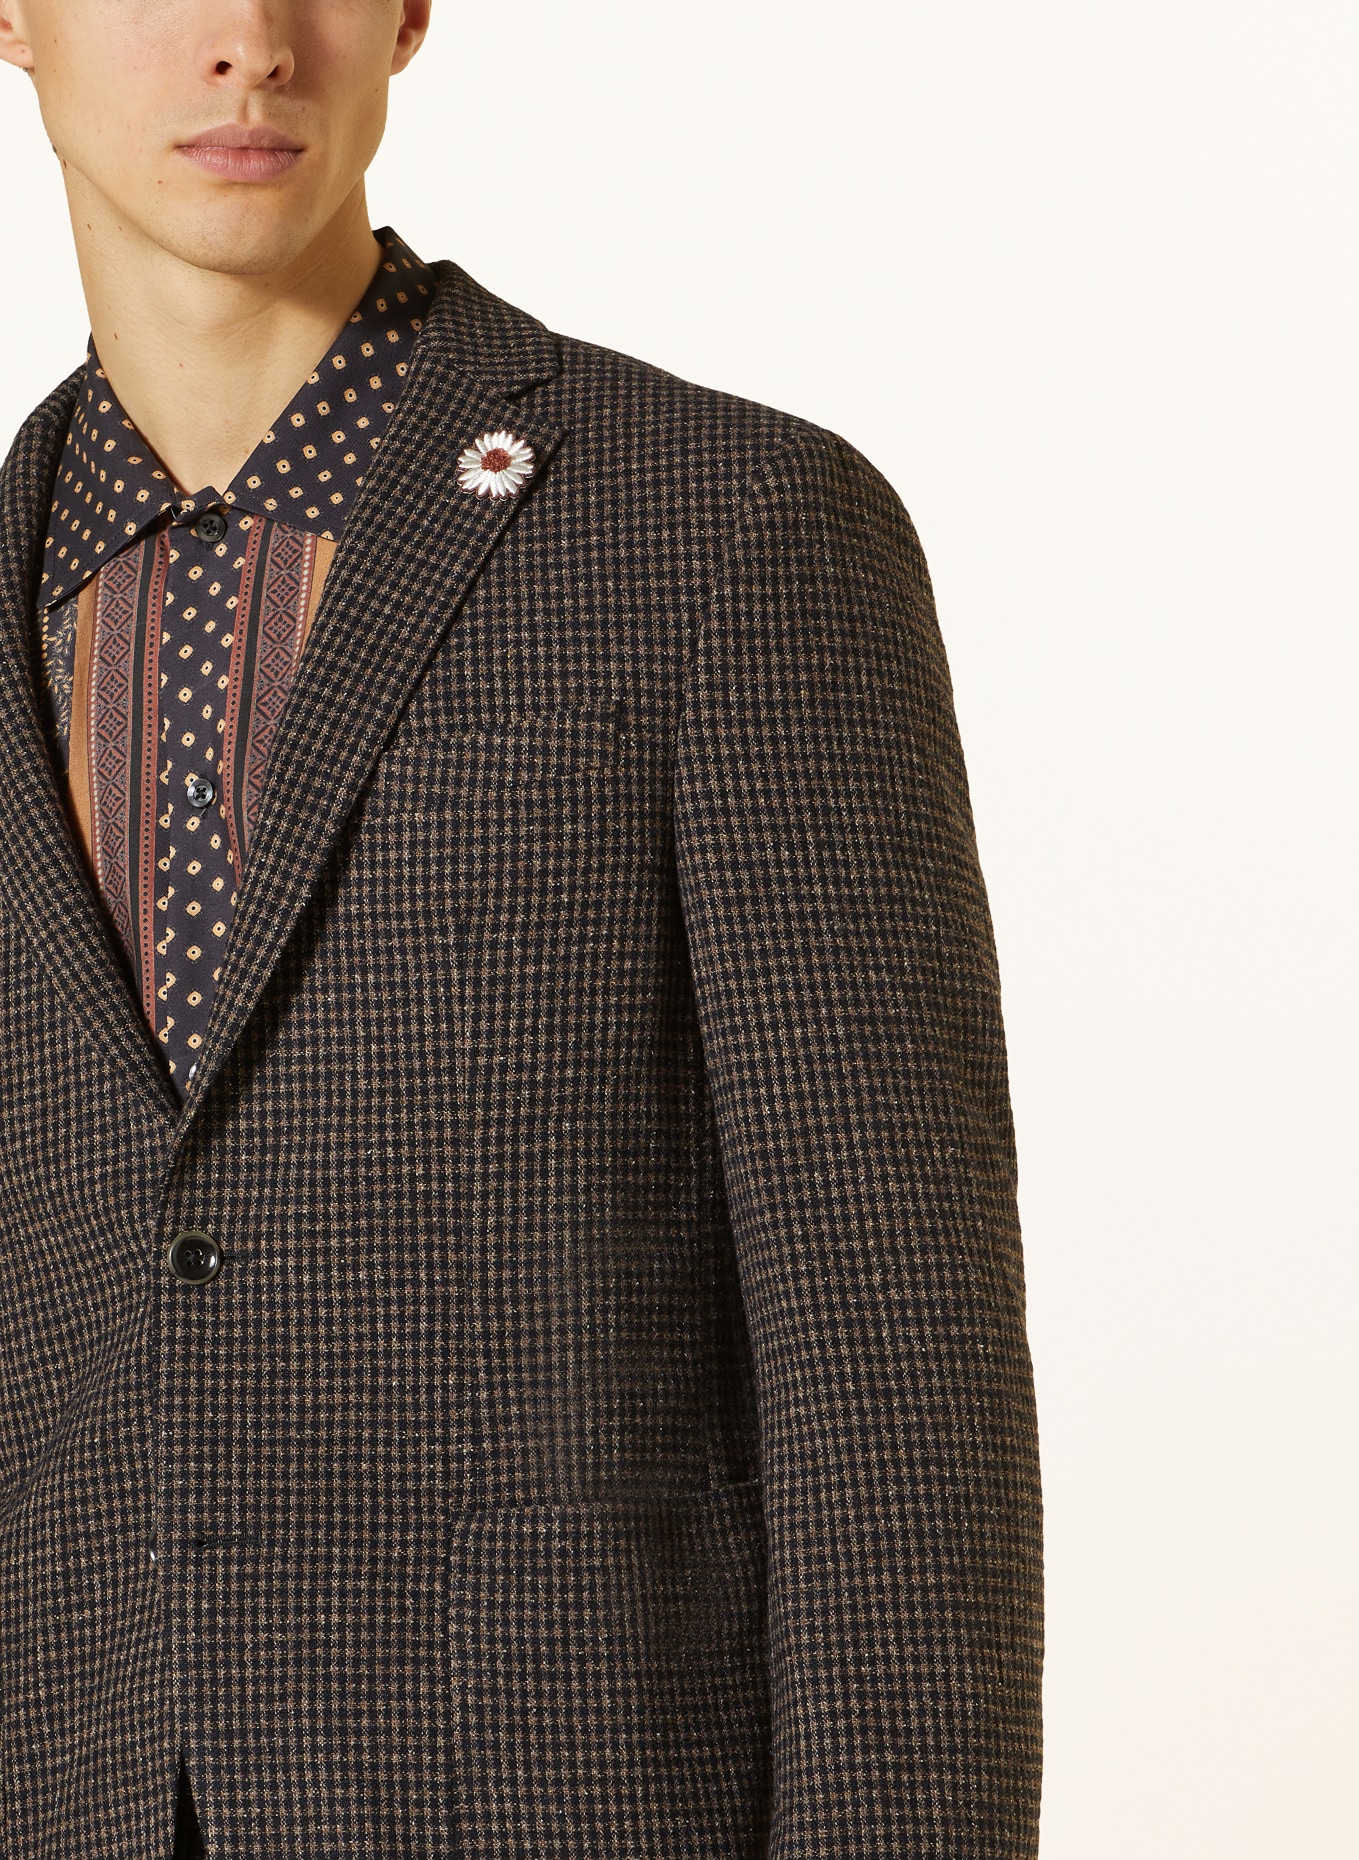 BALDESSARINI Suit jacket slim fit in tweed, Color: 8617 Cappuchino Check (Image 5)